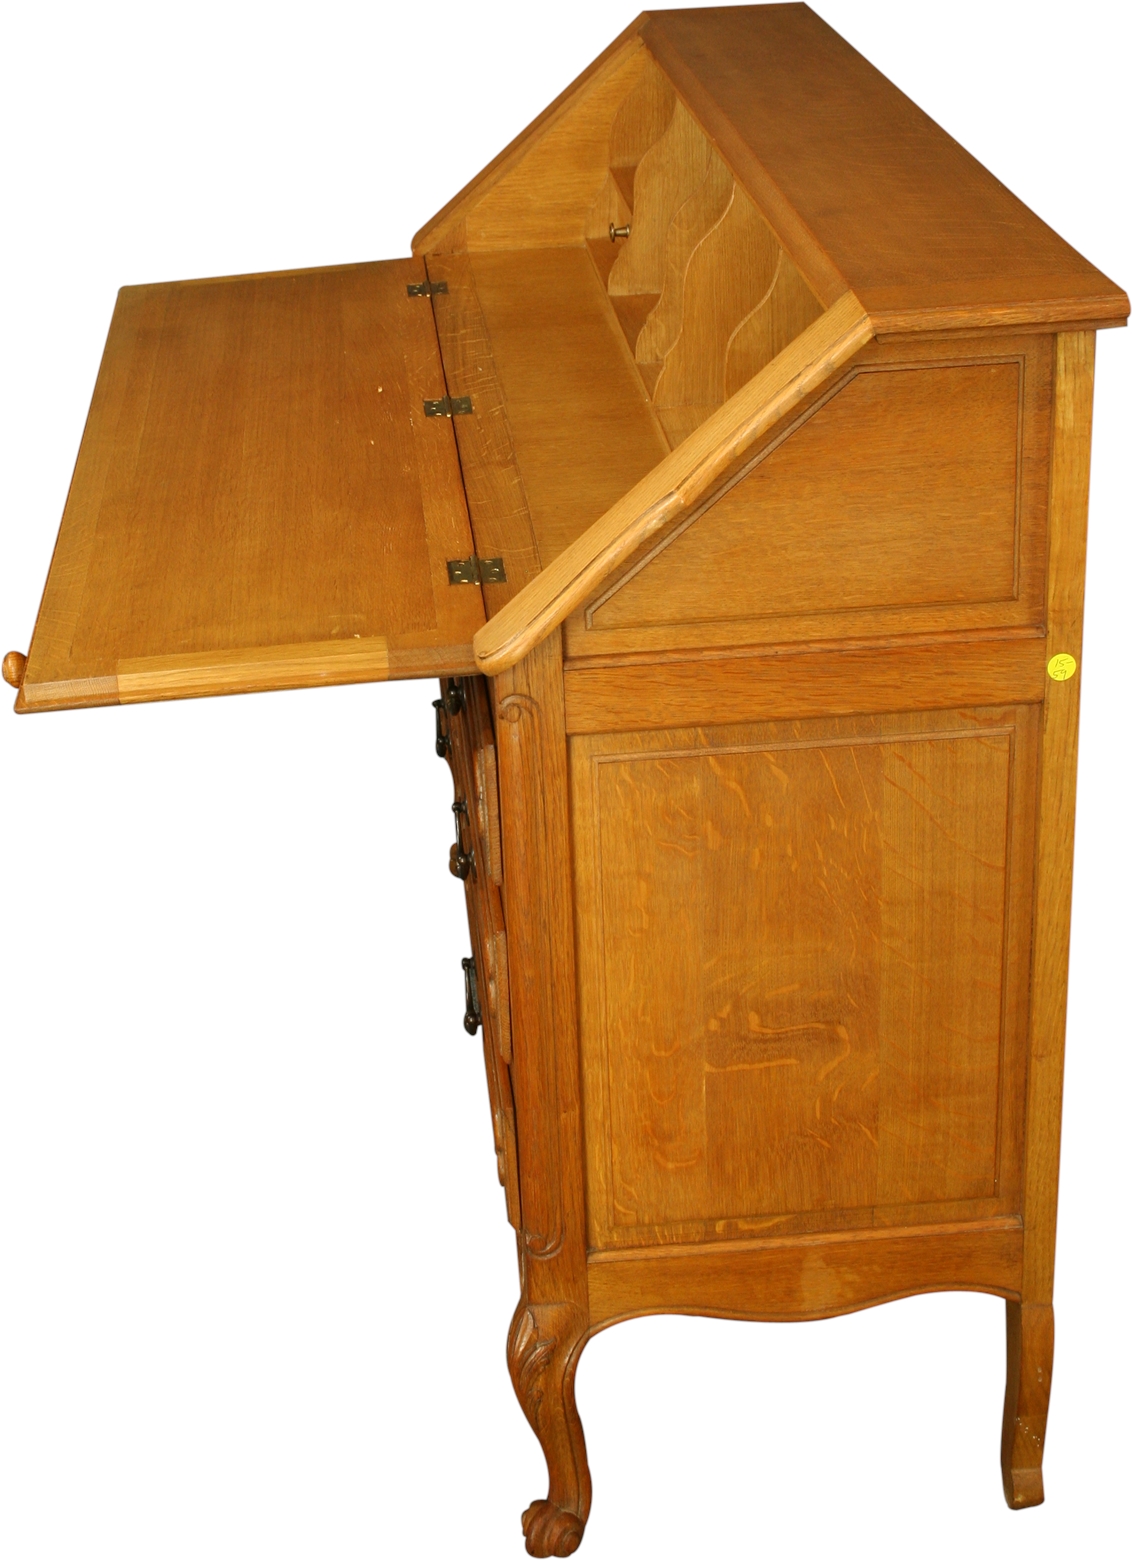 Vintage French Secretary Desk, Quartersawn Golden Oak, Carved, Louis XV Style-Image 21